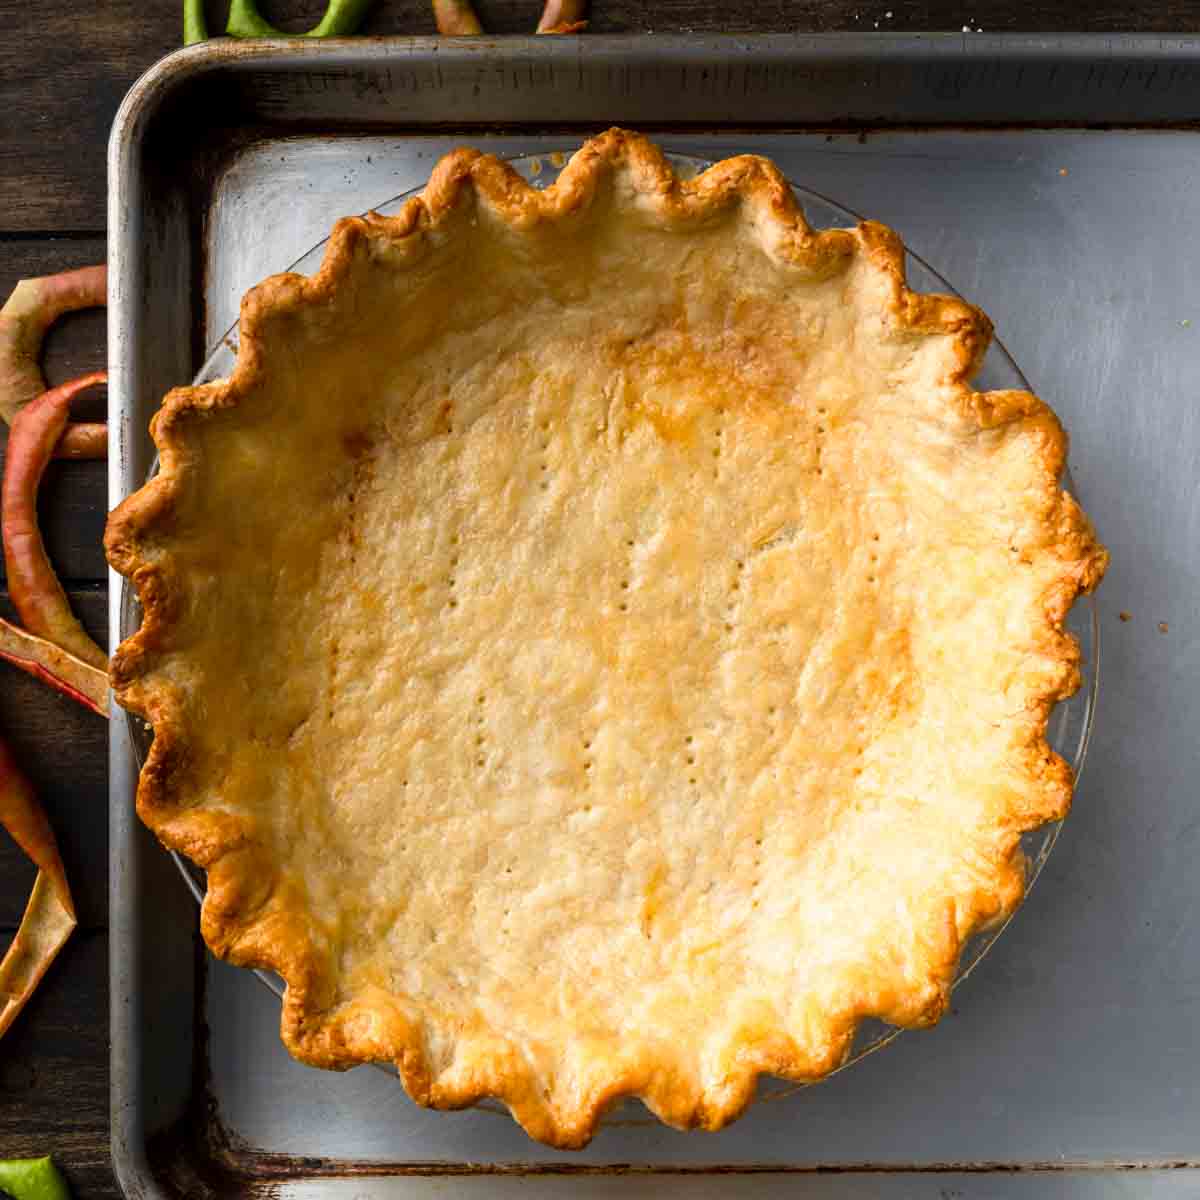 A golden brown blind baked pie crust